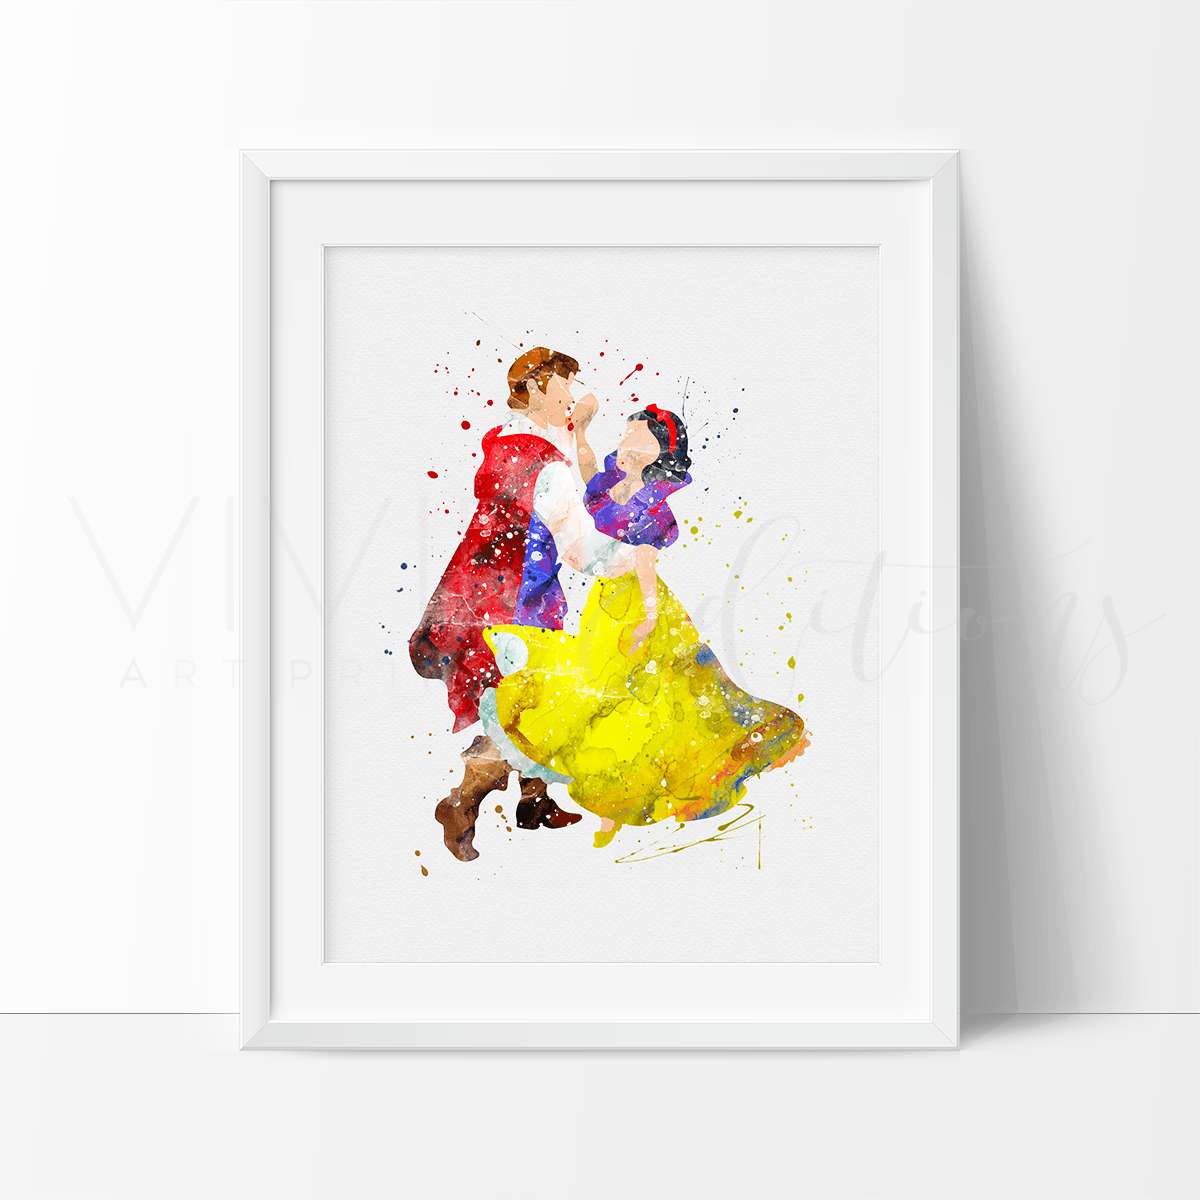 Snow White & The Prince Watercolor Art Print Print - VividEditions